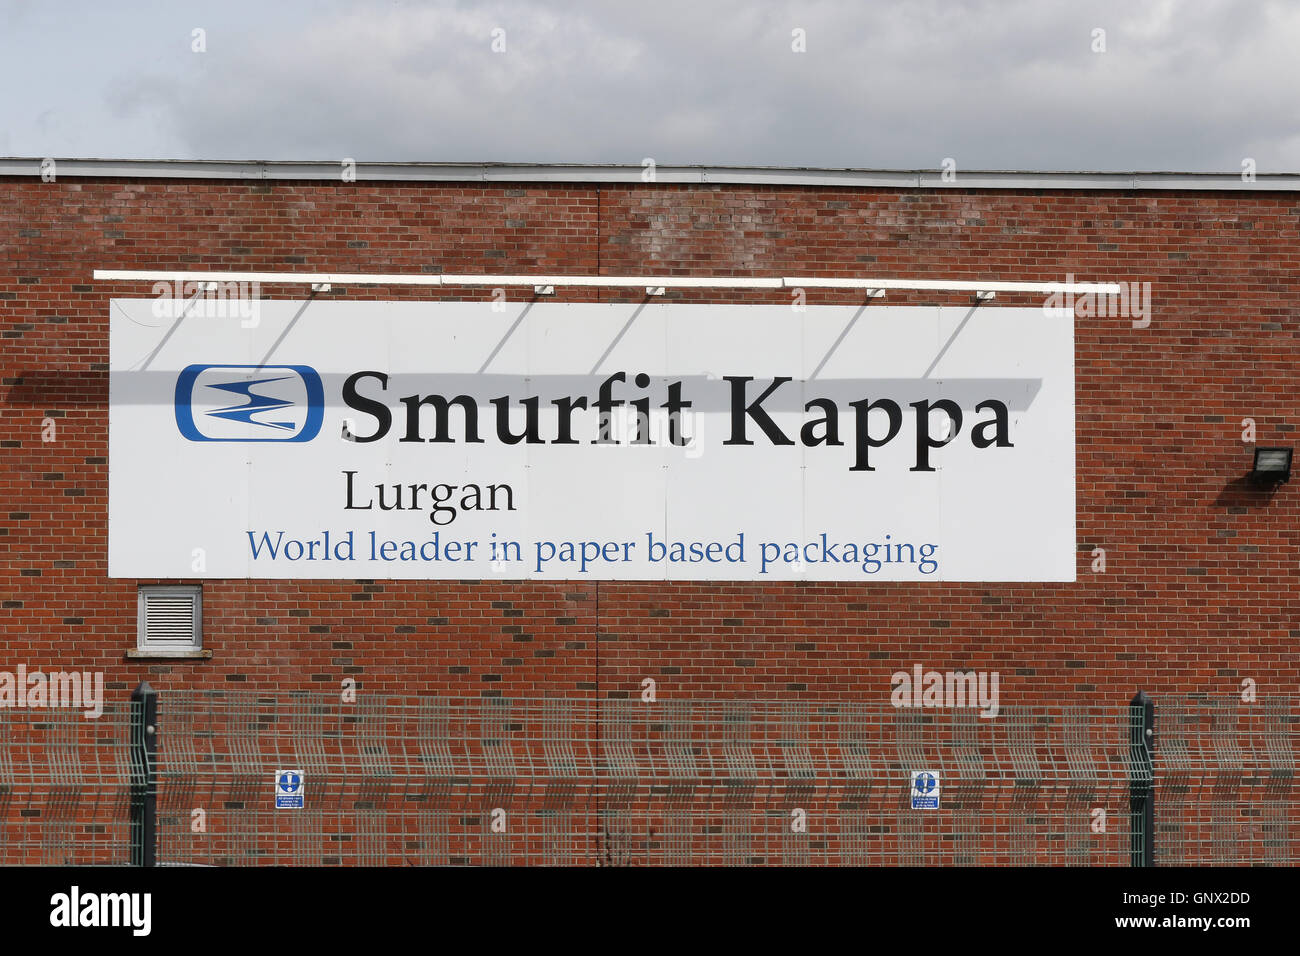 Smurfit kappa lurgan hi-res stock photography and images - Alamy